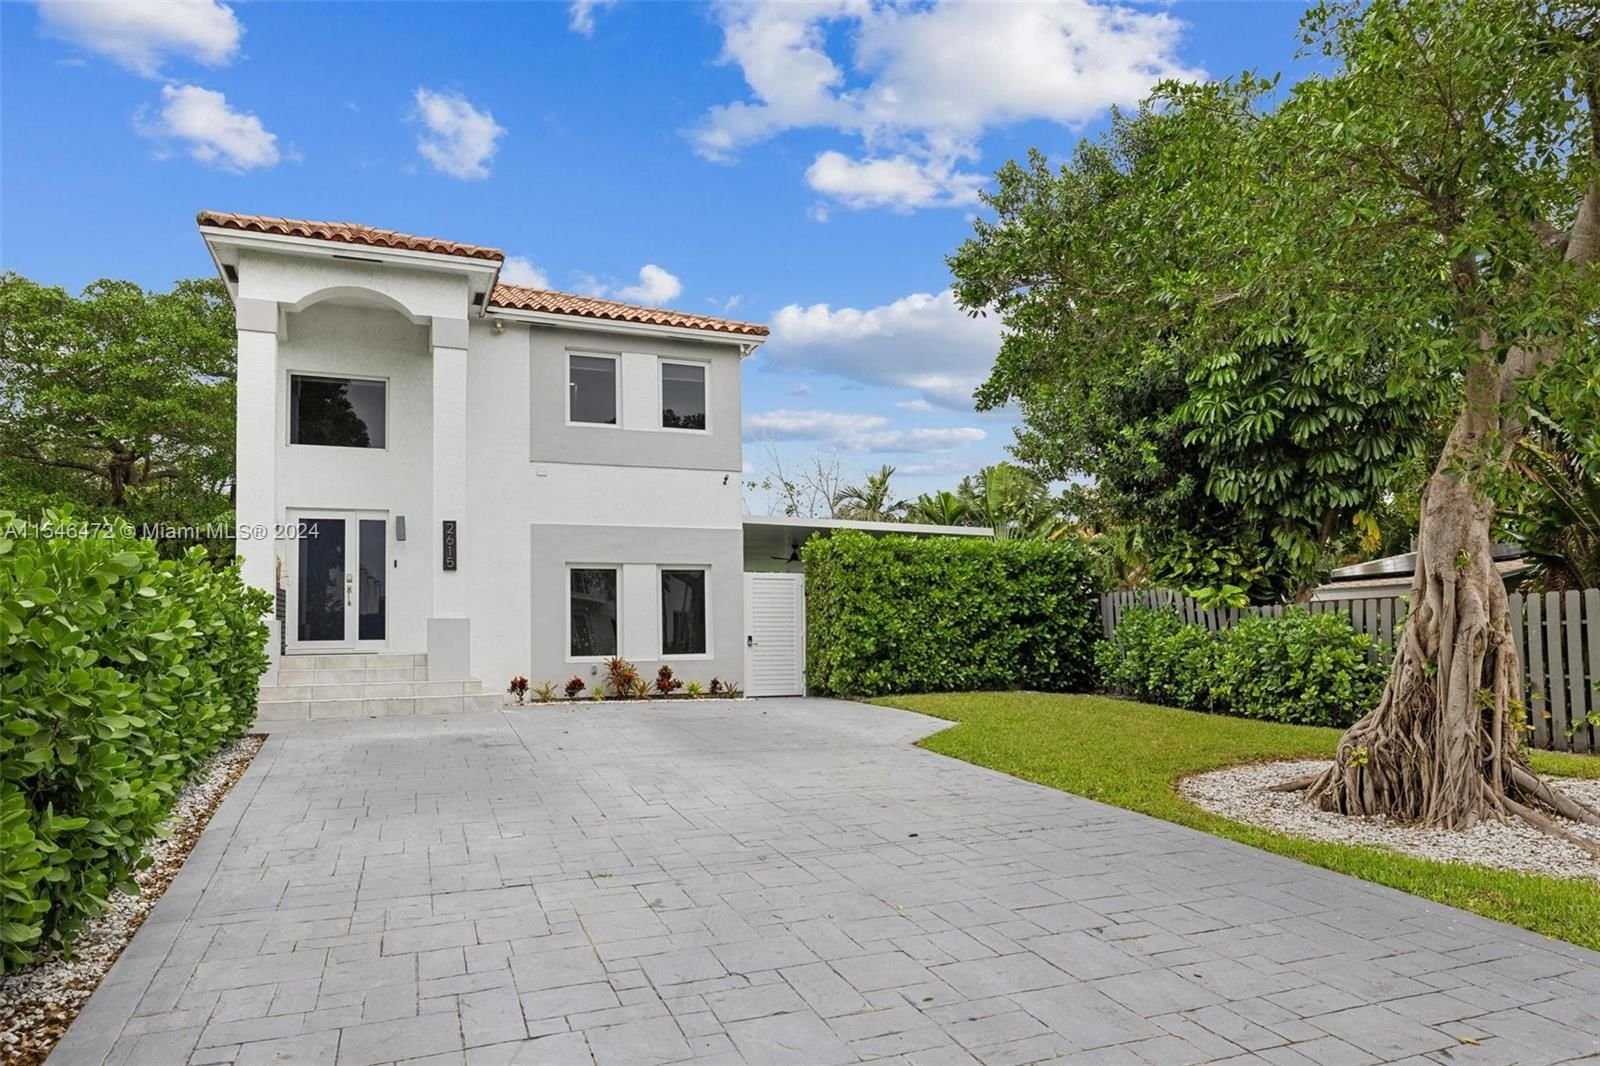 Real estate property located at 2615 213th St, Miami-Dade County, BILTMORE PK, Miami, FL